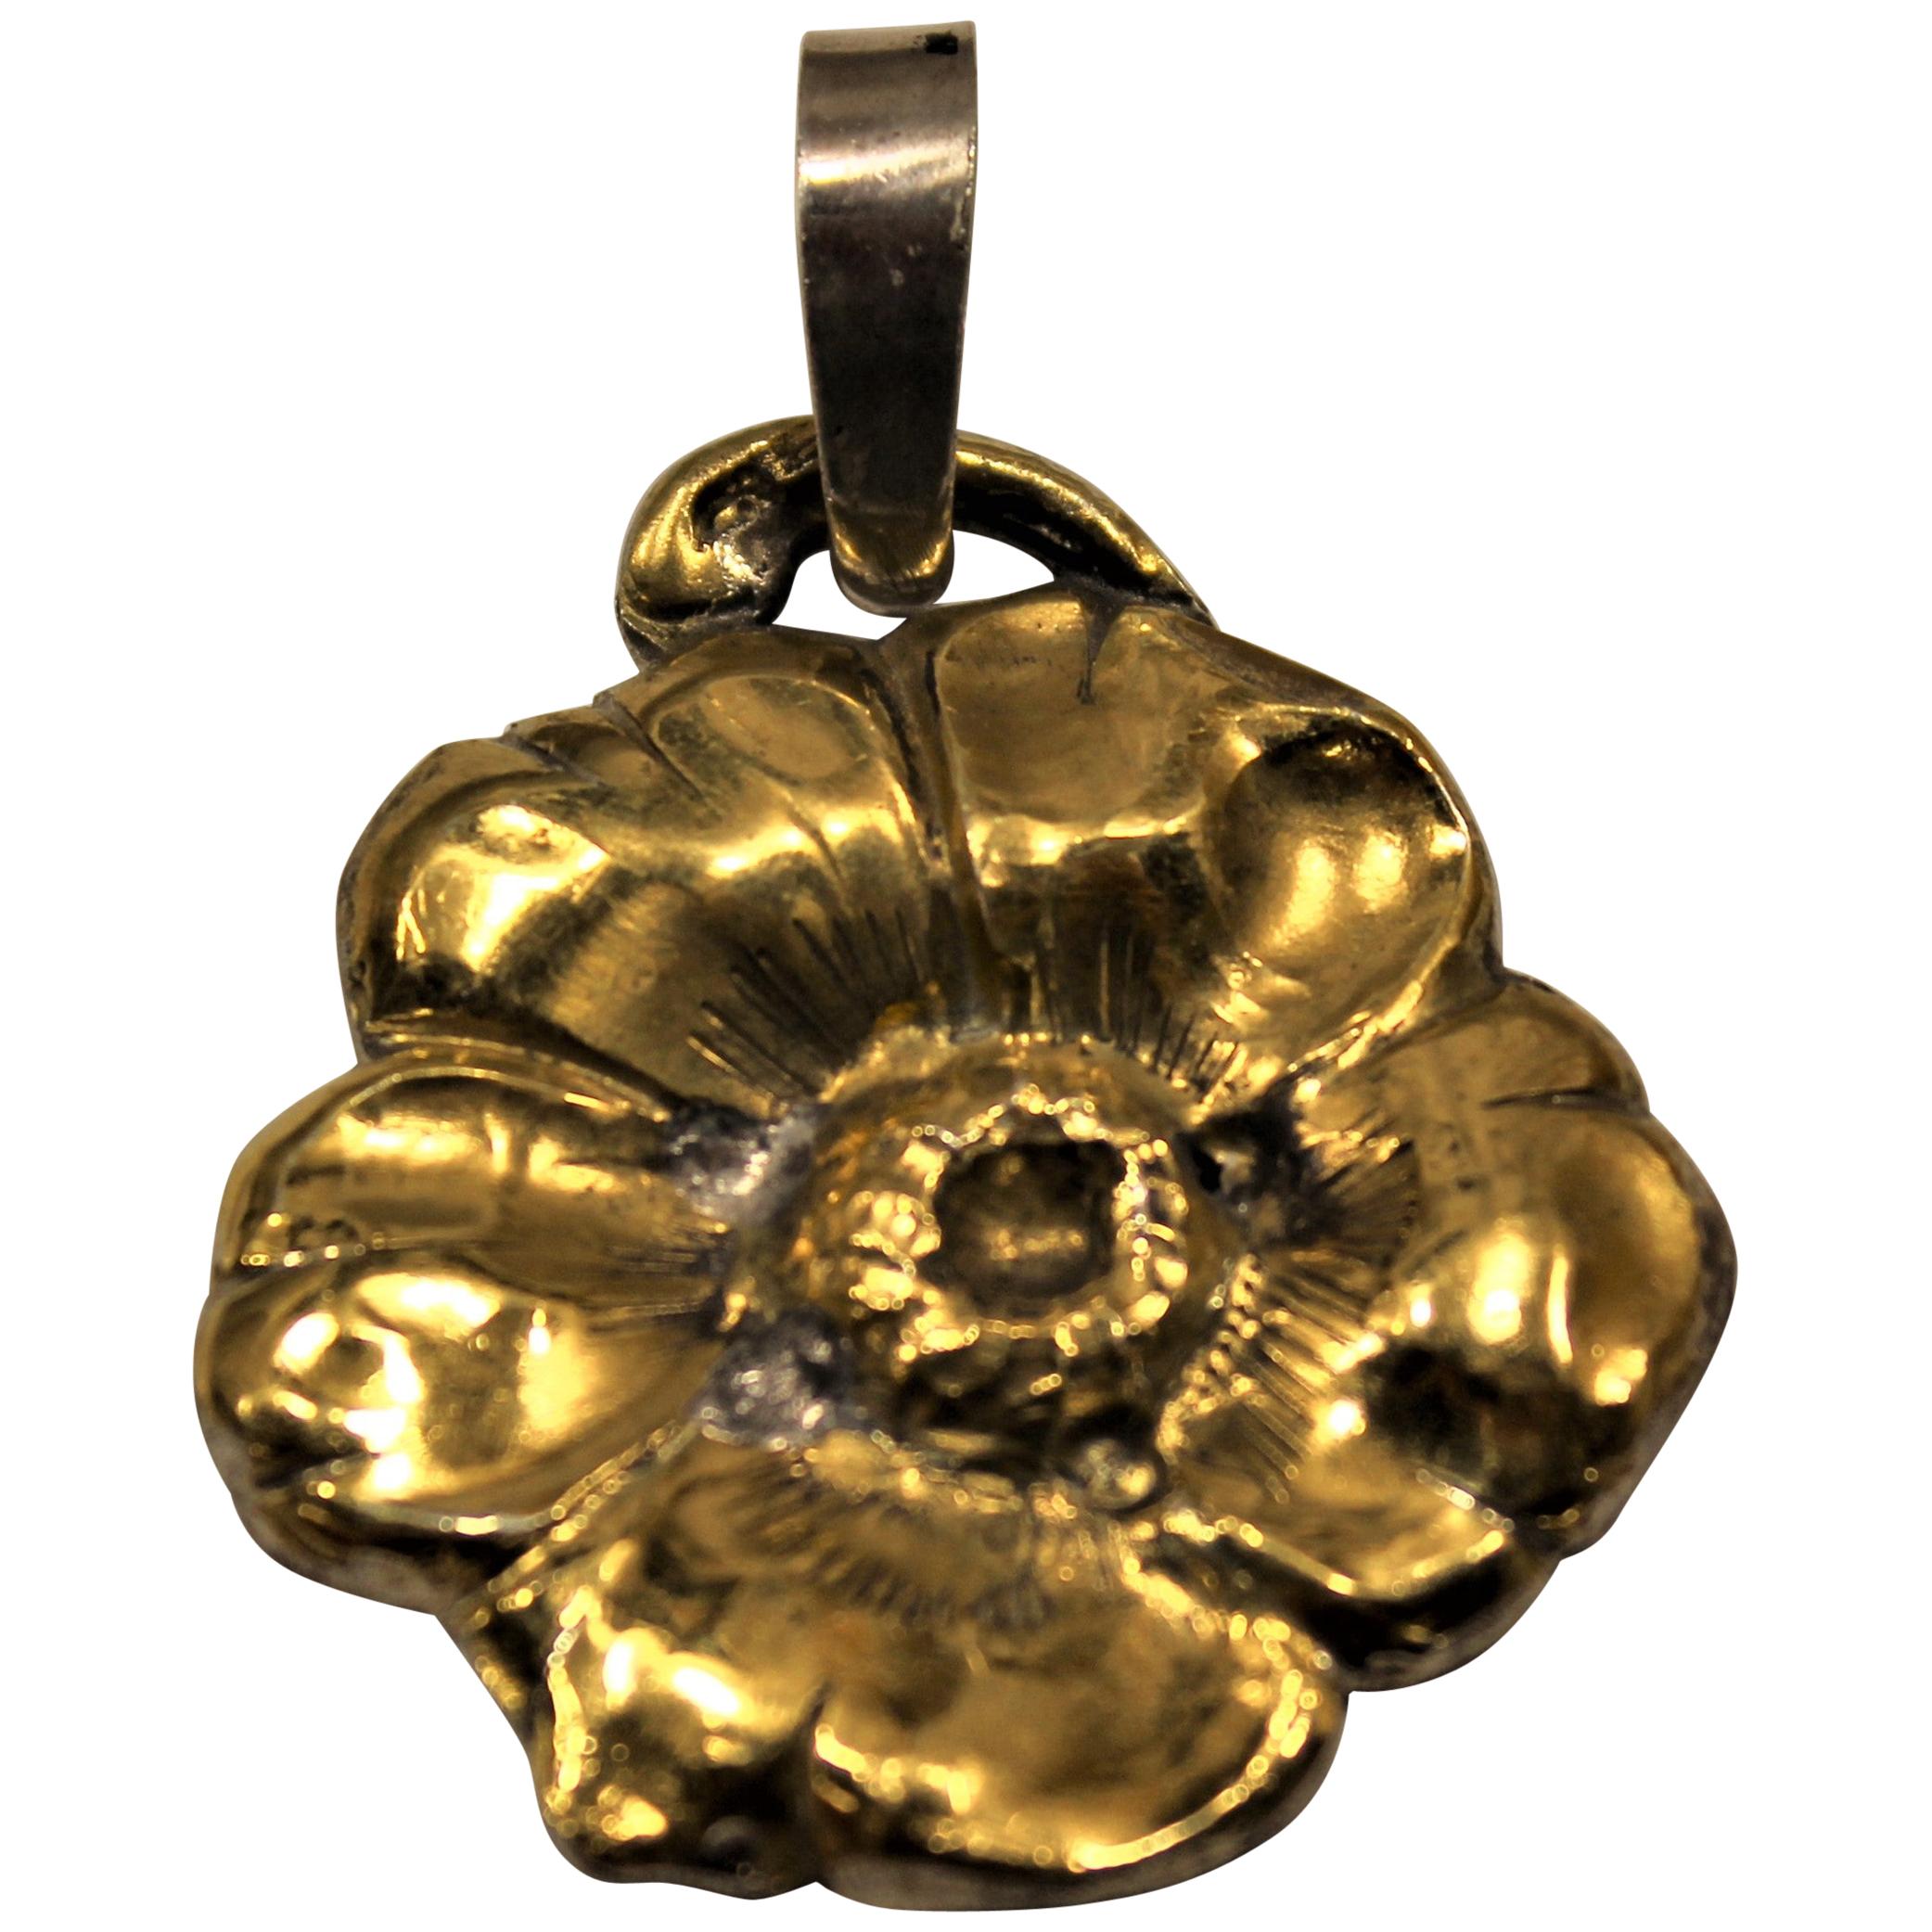 24 Karat Gold, Solid Silver, Pendant, Five Petals, Handcrafted, Italy